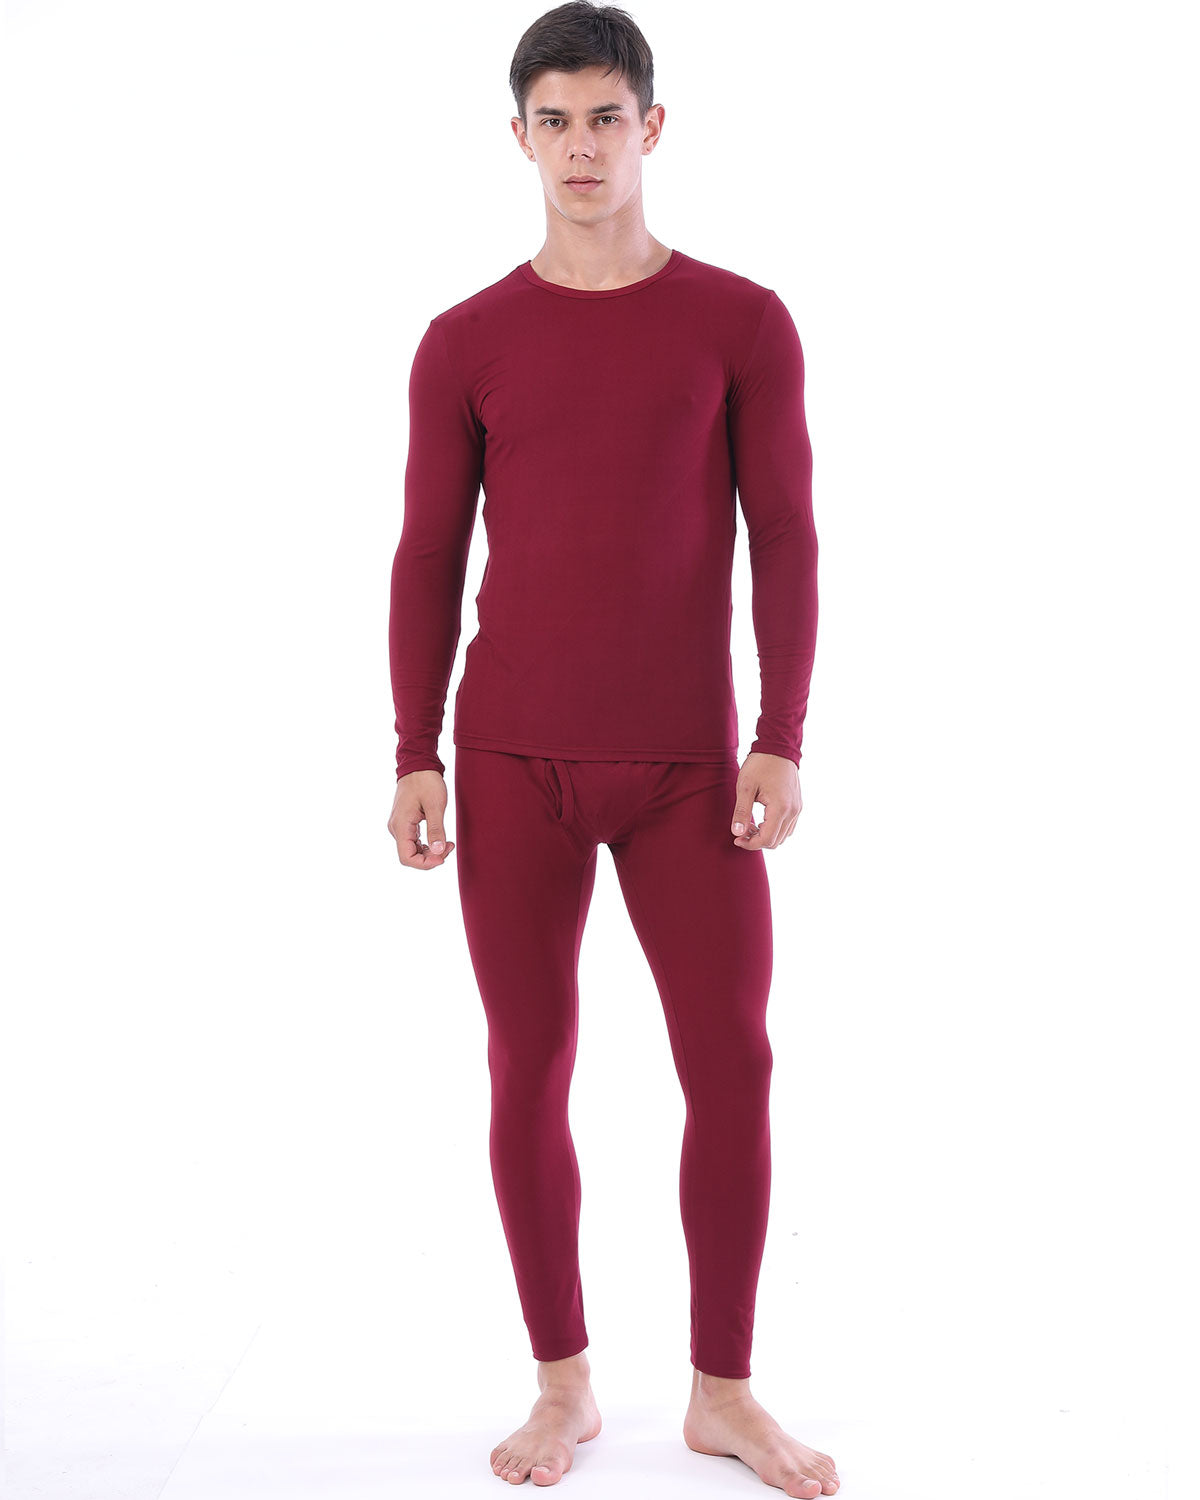 Boni Thermal Underwear Men's Heattech Long Johns Seamless Tailor